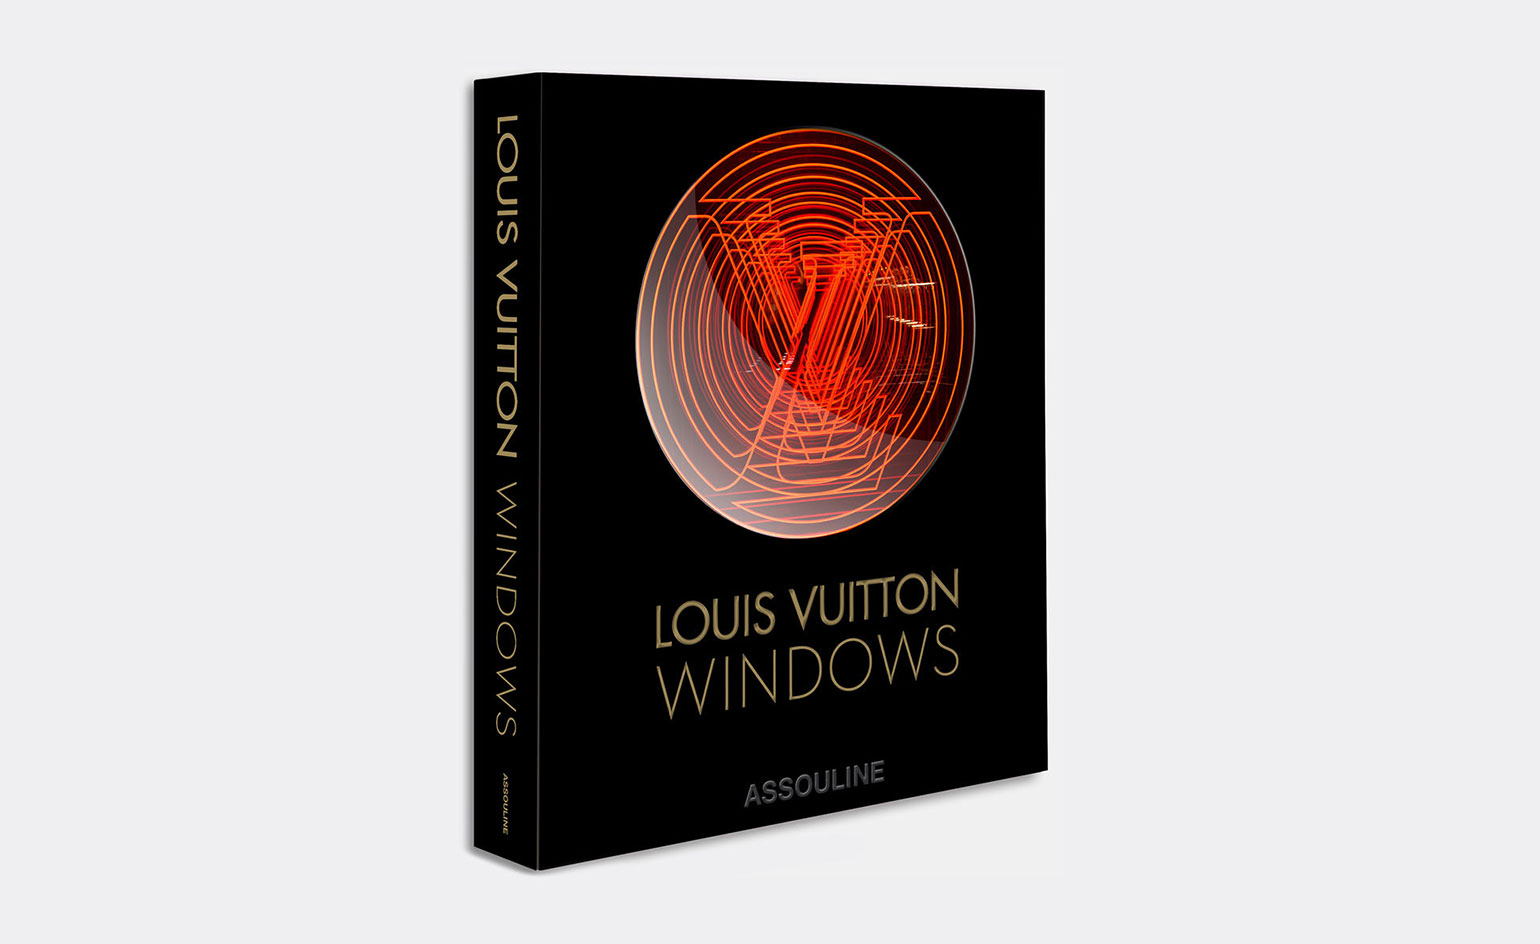 Louis Vuitton Flagship Store #Retail #Store #Windows